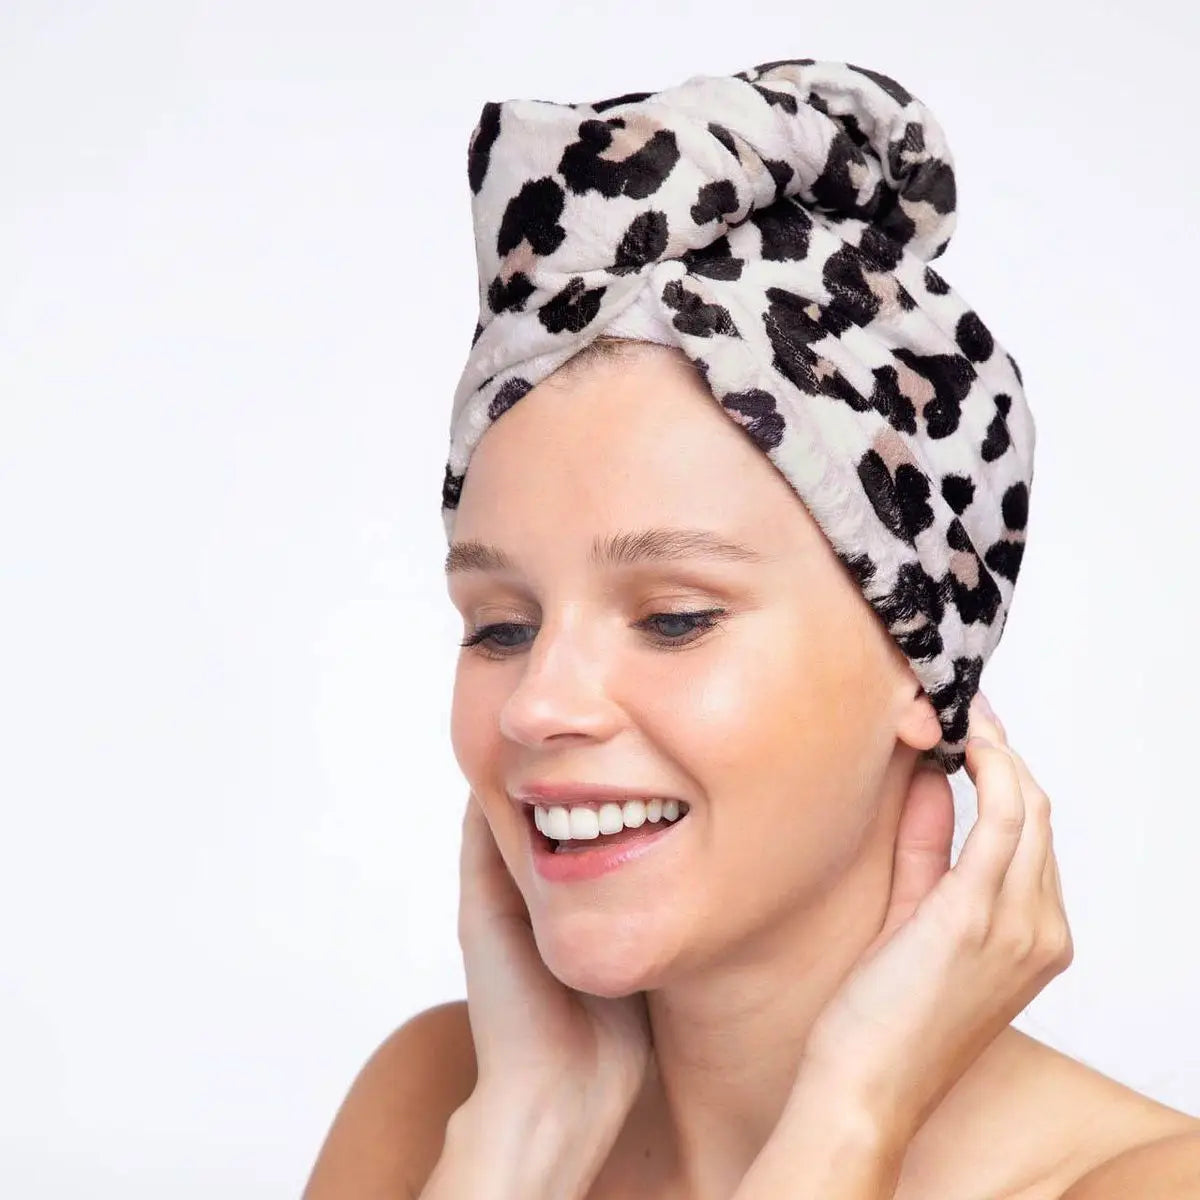 Kitsch - Quick Dry Hair Towel - Leopard